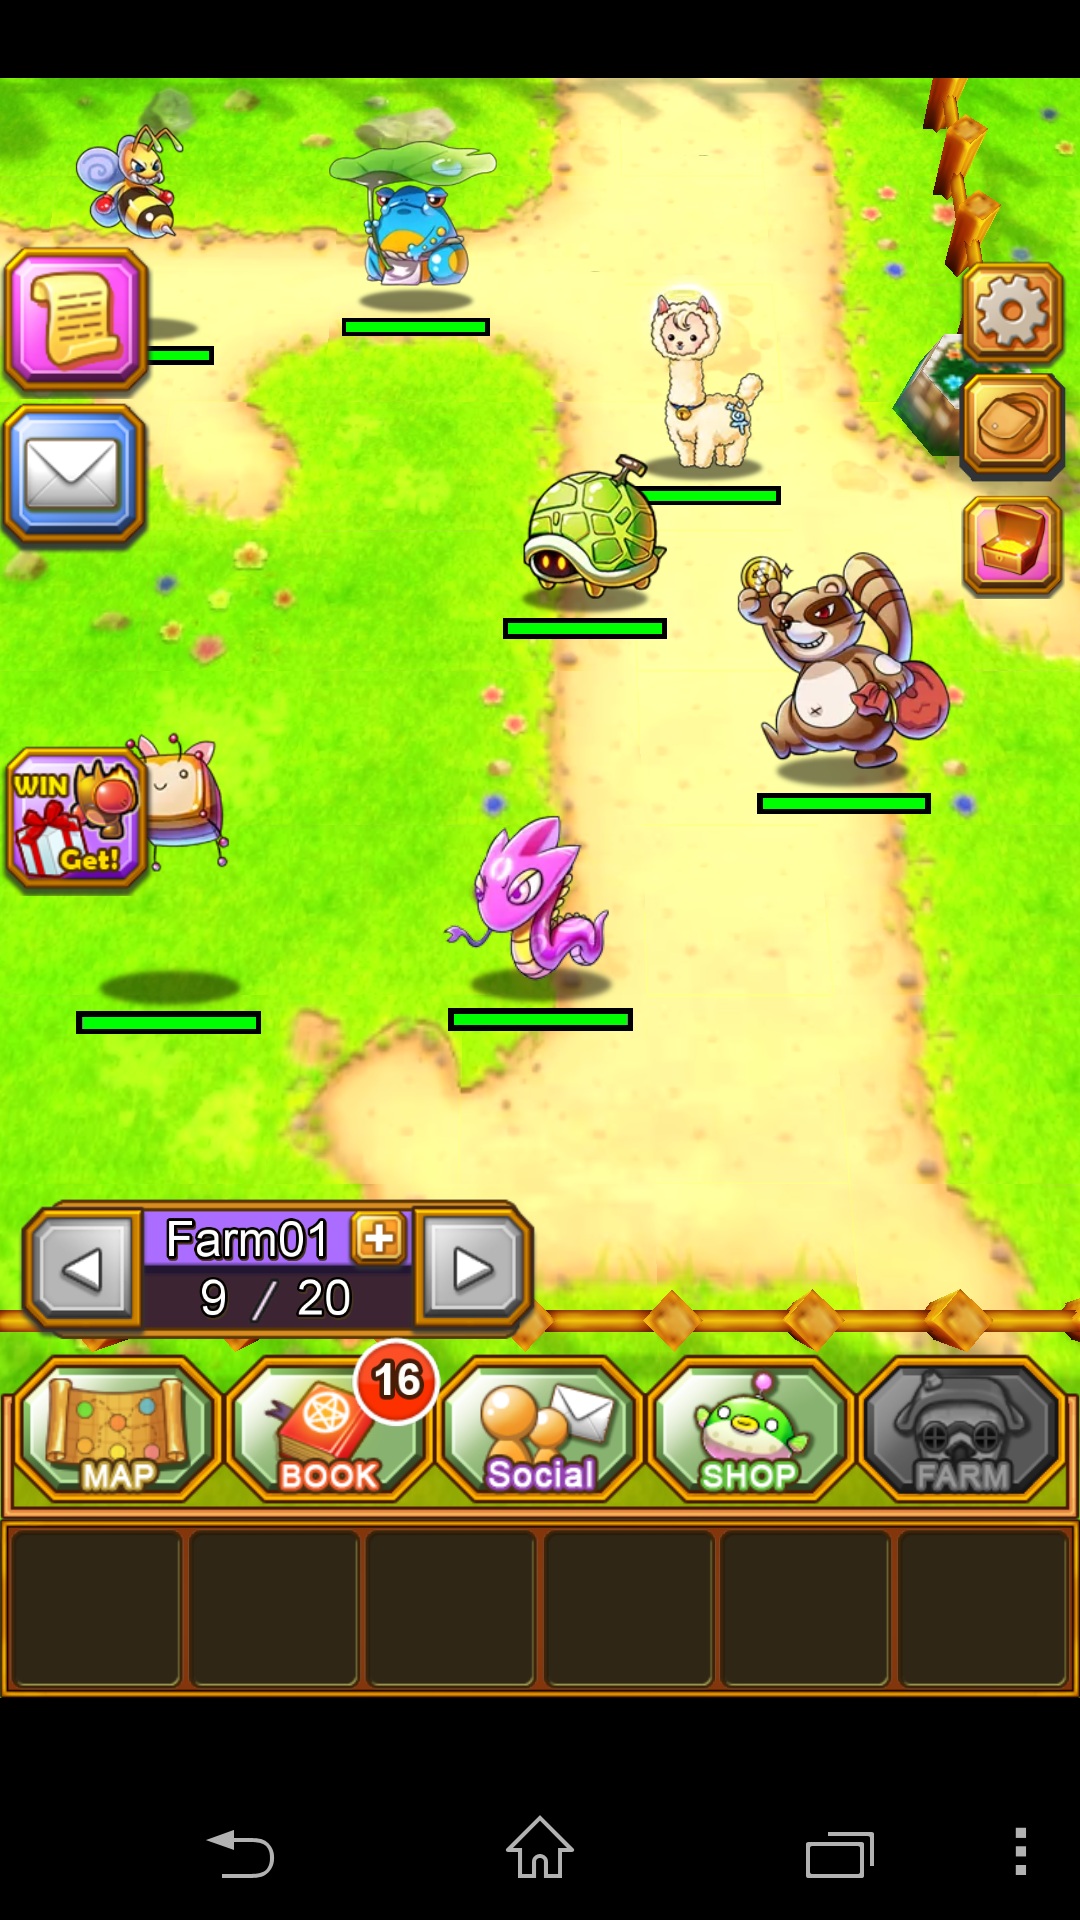 2game-Bulu-Monster-mobile-6.png (1080×1920)